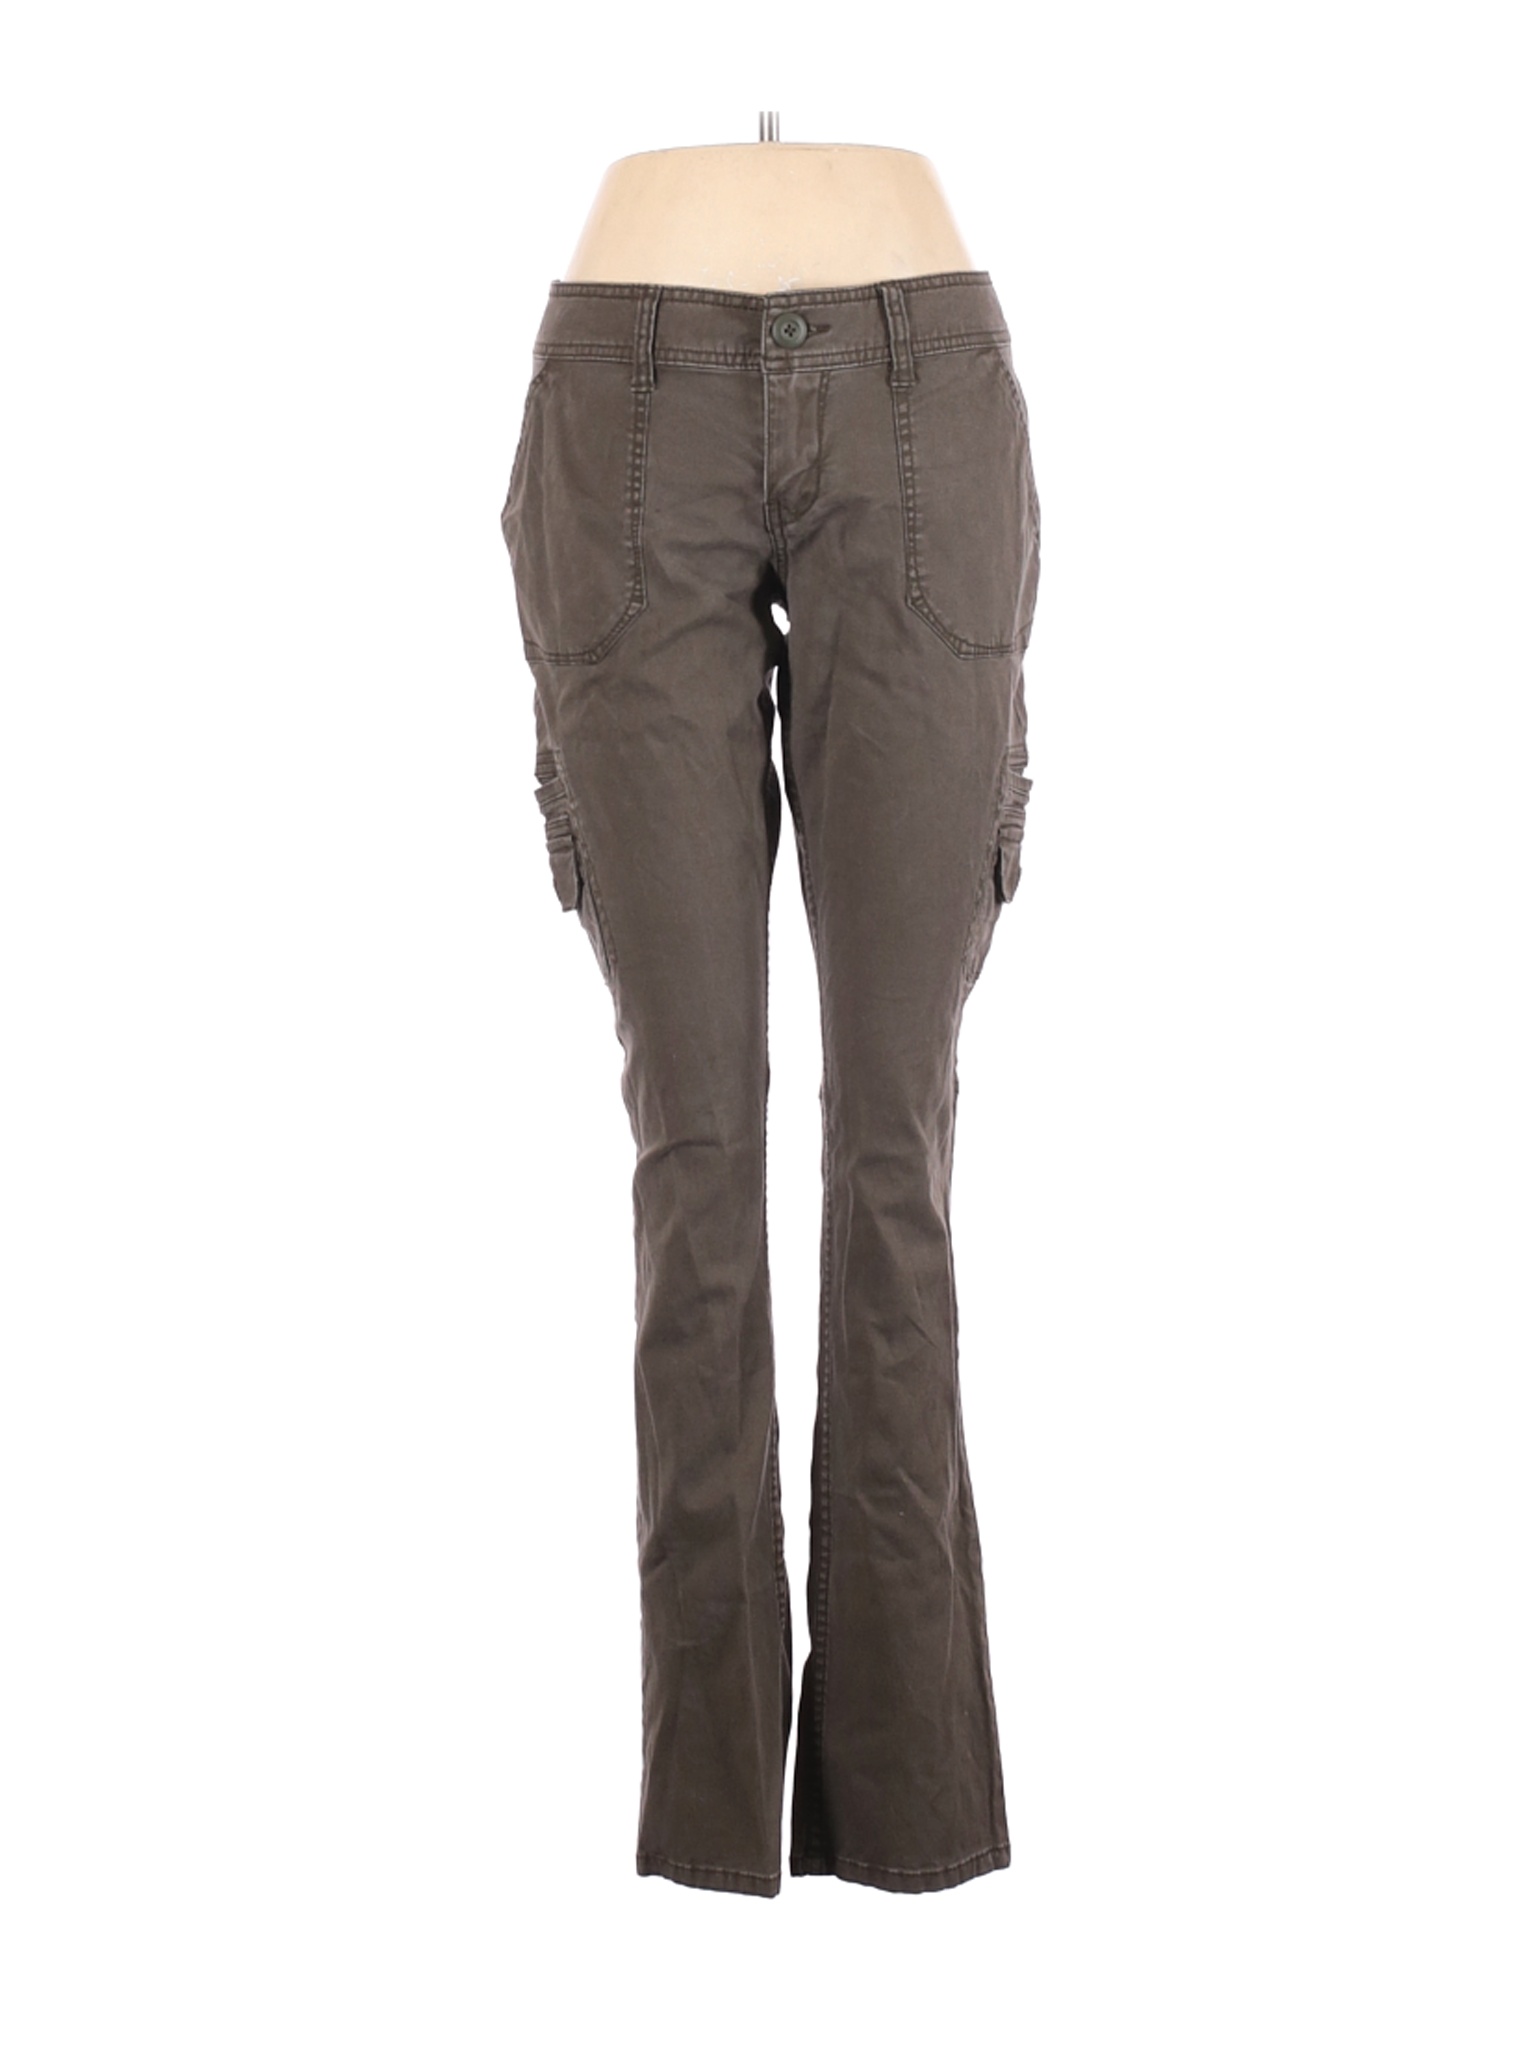 Mossimo Supply Co. Women Brown Cargo Pants 9 | eBay